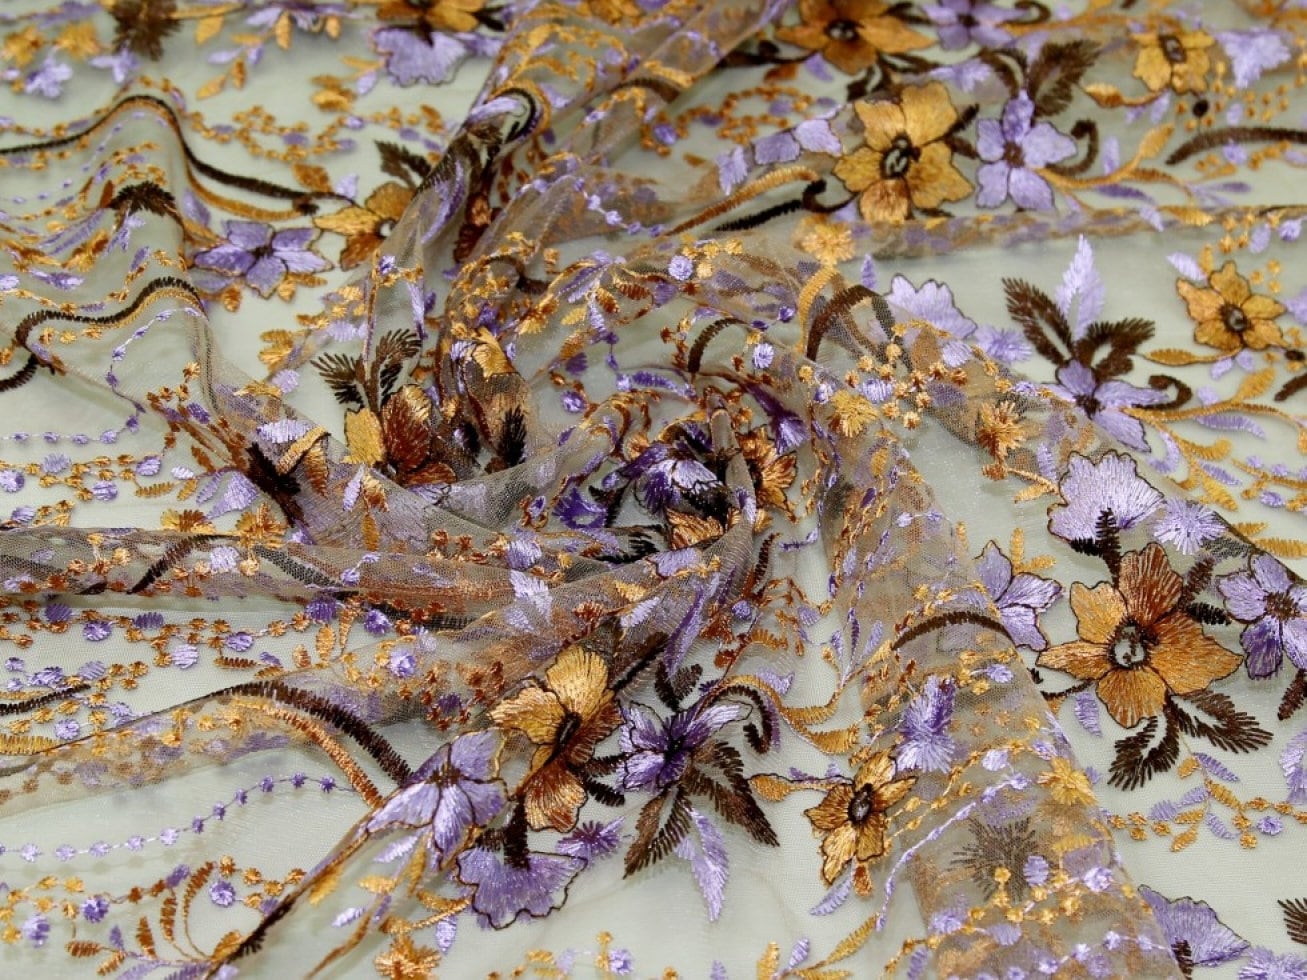 Minerva Crafts Soft Tulle Net Fabric Violet Purple - per metre